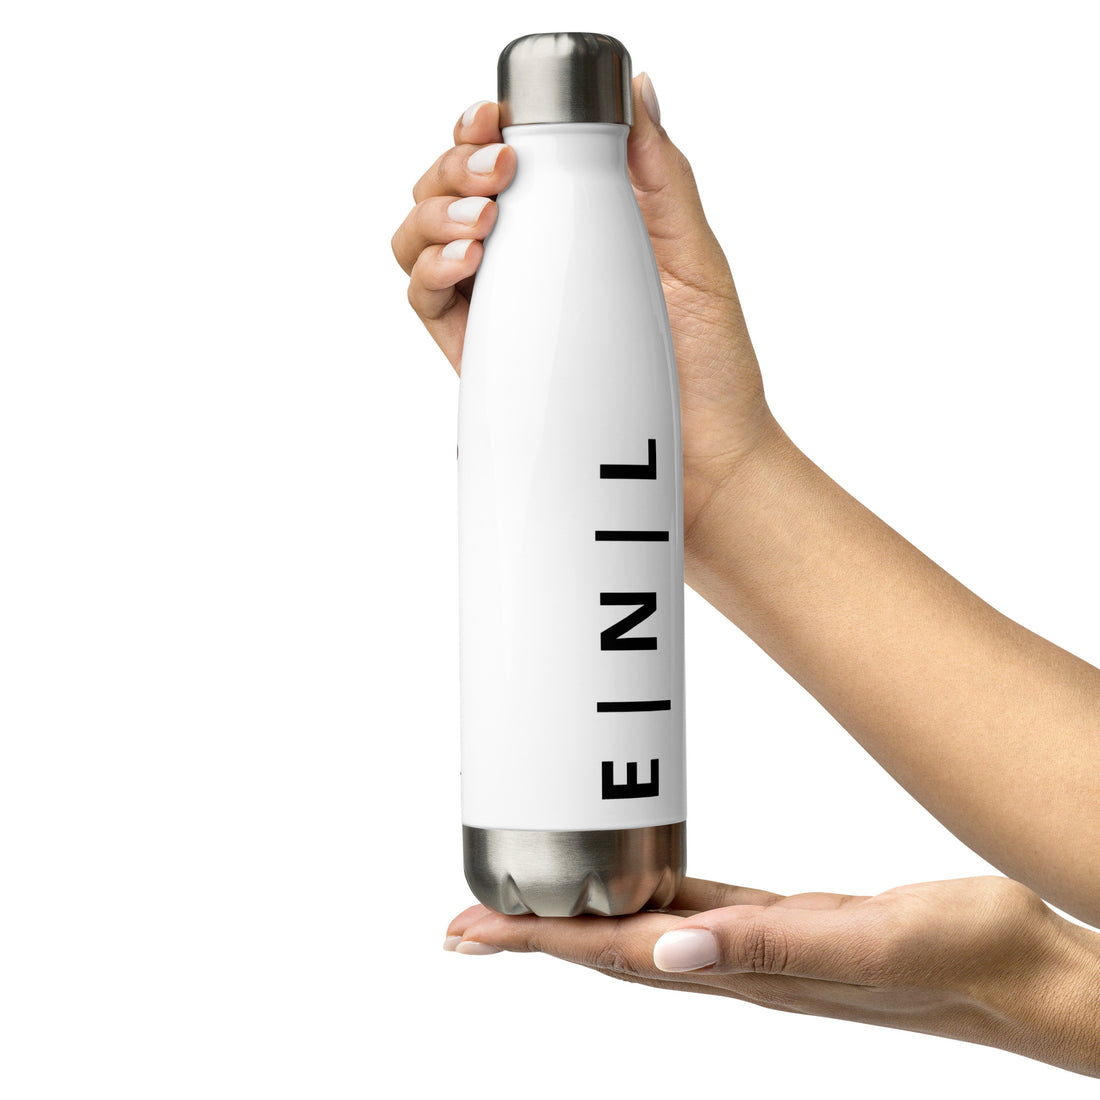 ENL Stainless Steel Water Bottle